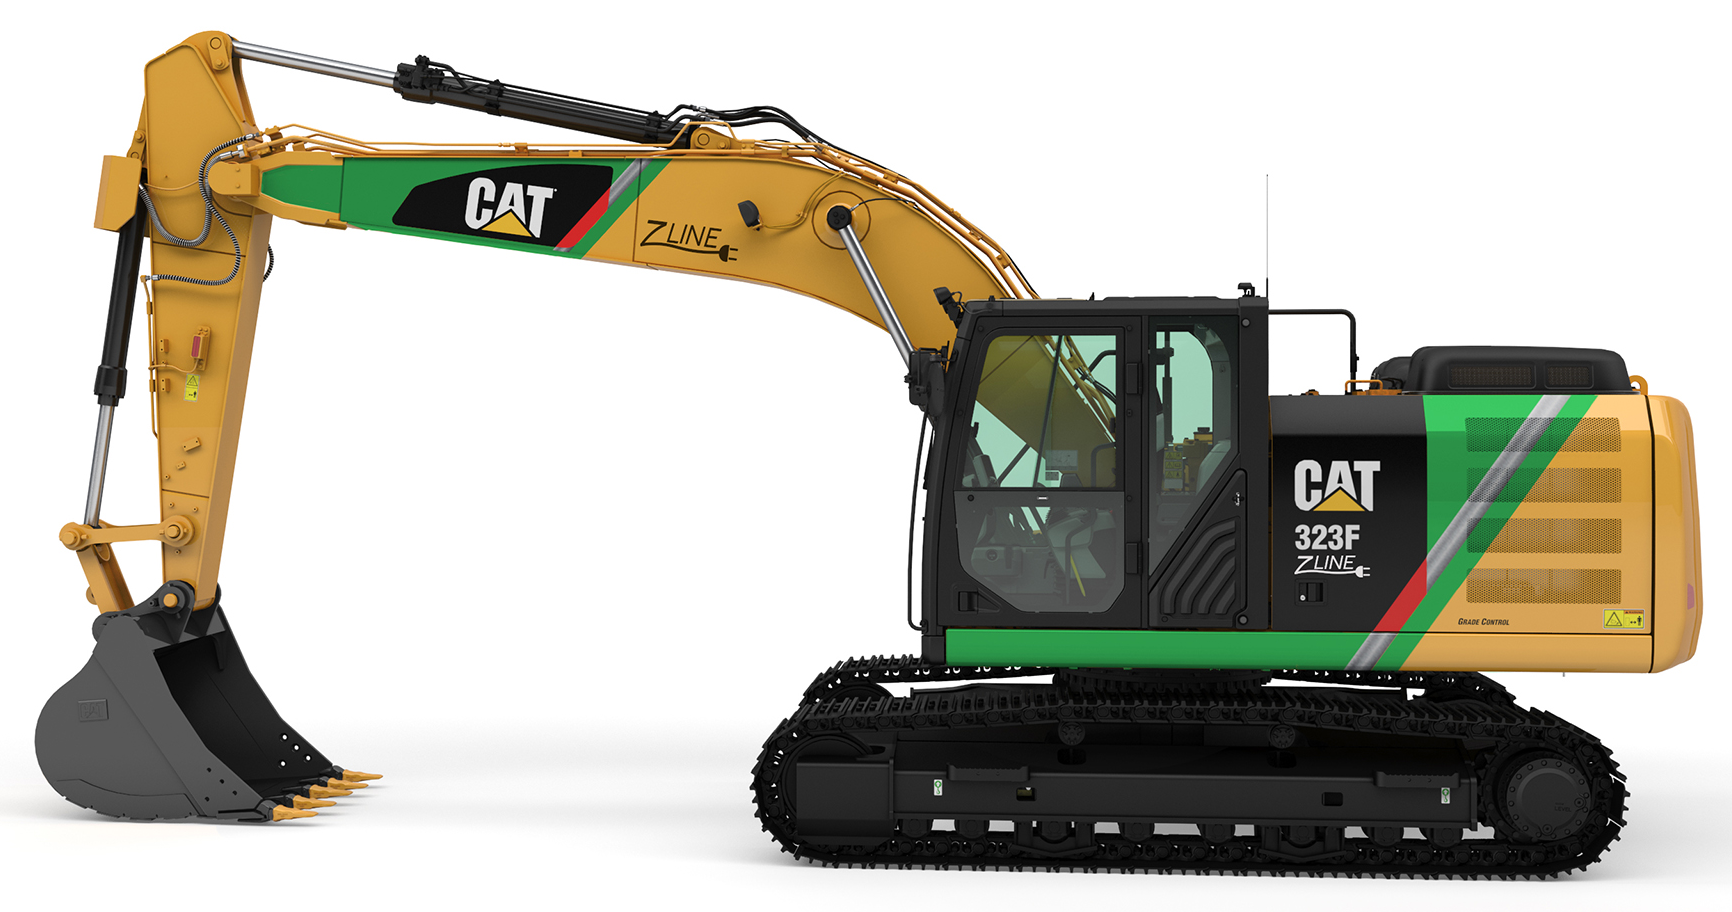 The Cat 323F Z-line excavator. Source: Pon Cat